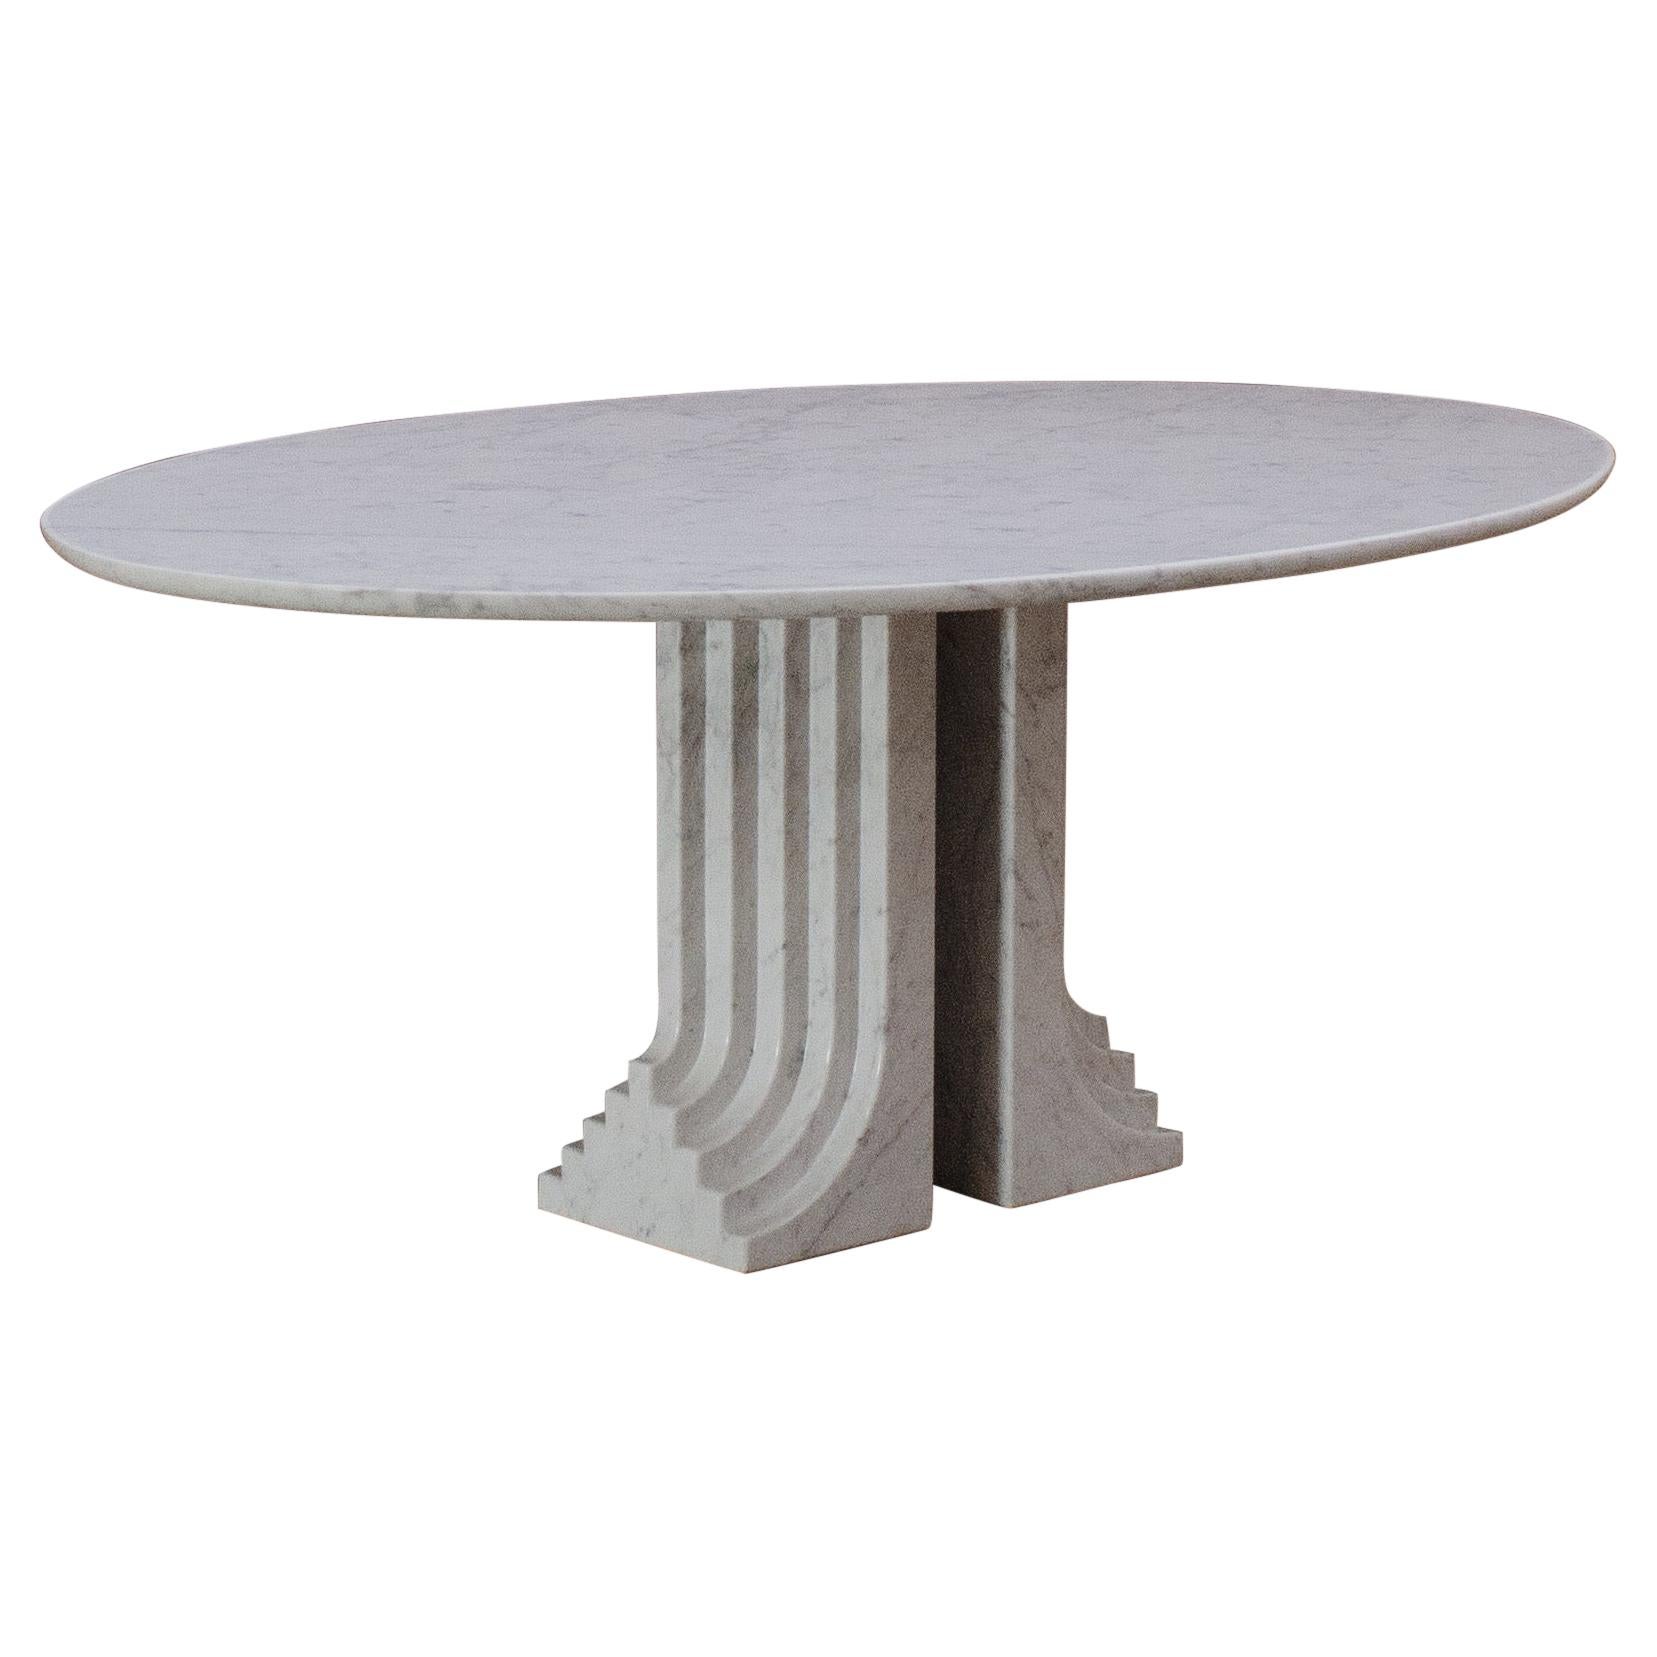 Carlo Scarpa "Samo" Oval Table for Simon Gavina, 1971